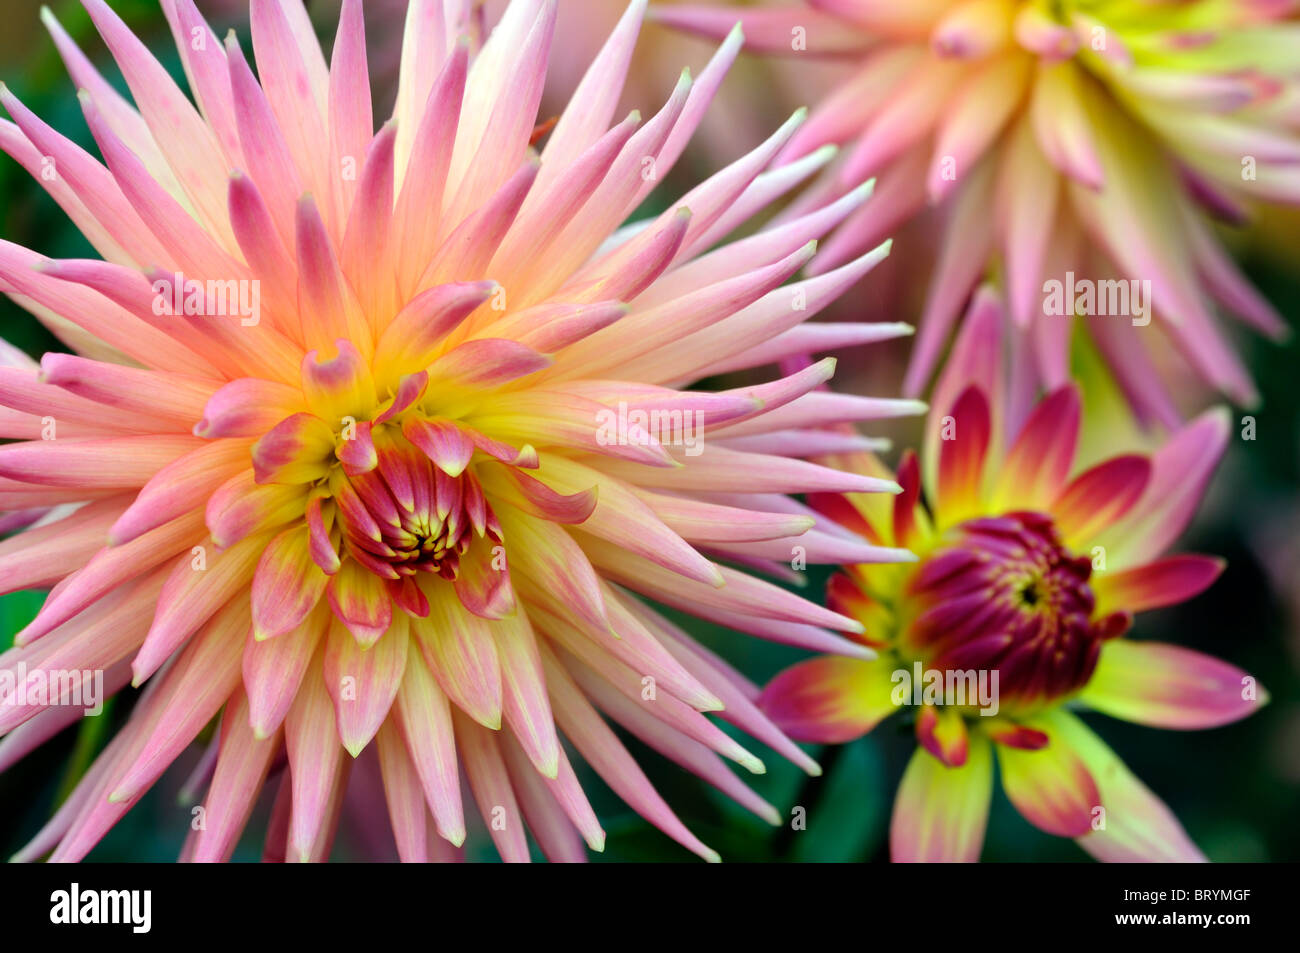 dahlia friendship cactus type variety hybrid Compositae pink white orange yellow blends Stock Photo